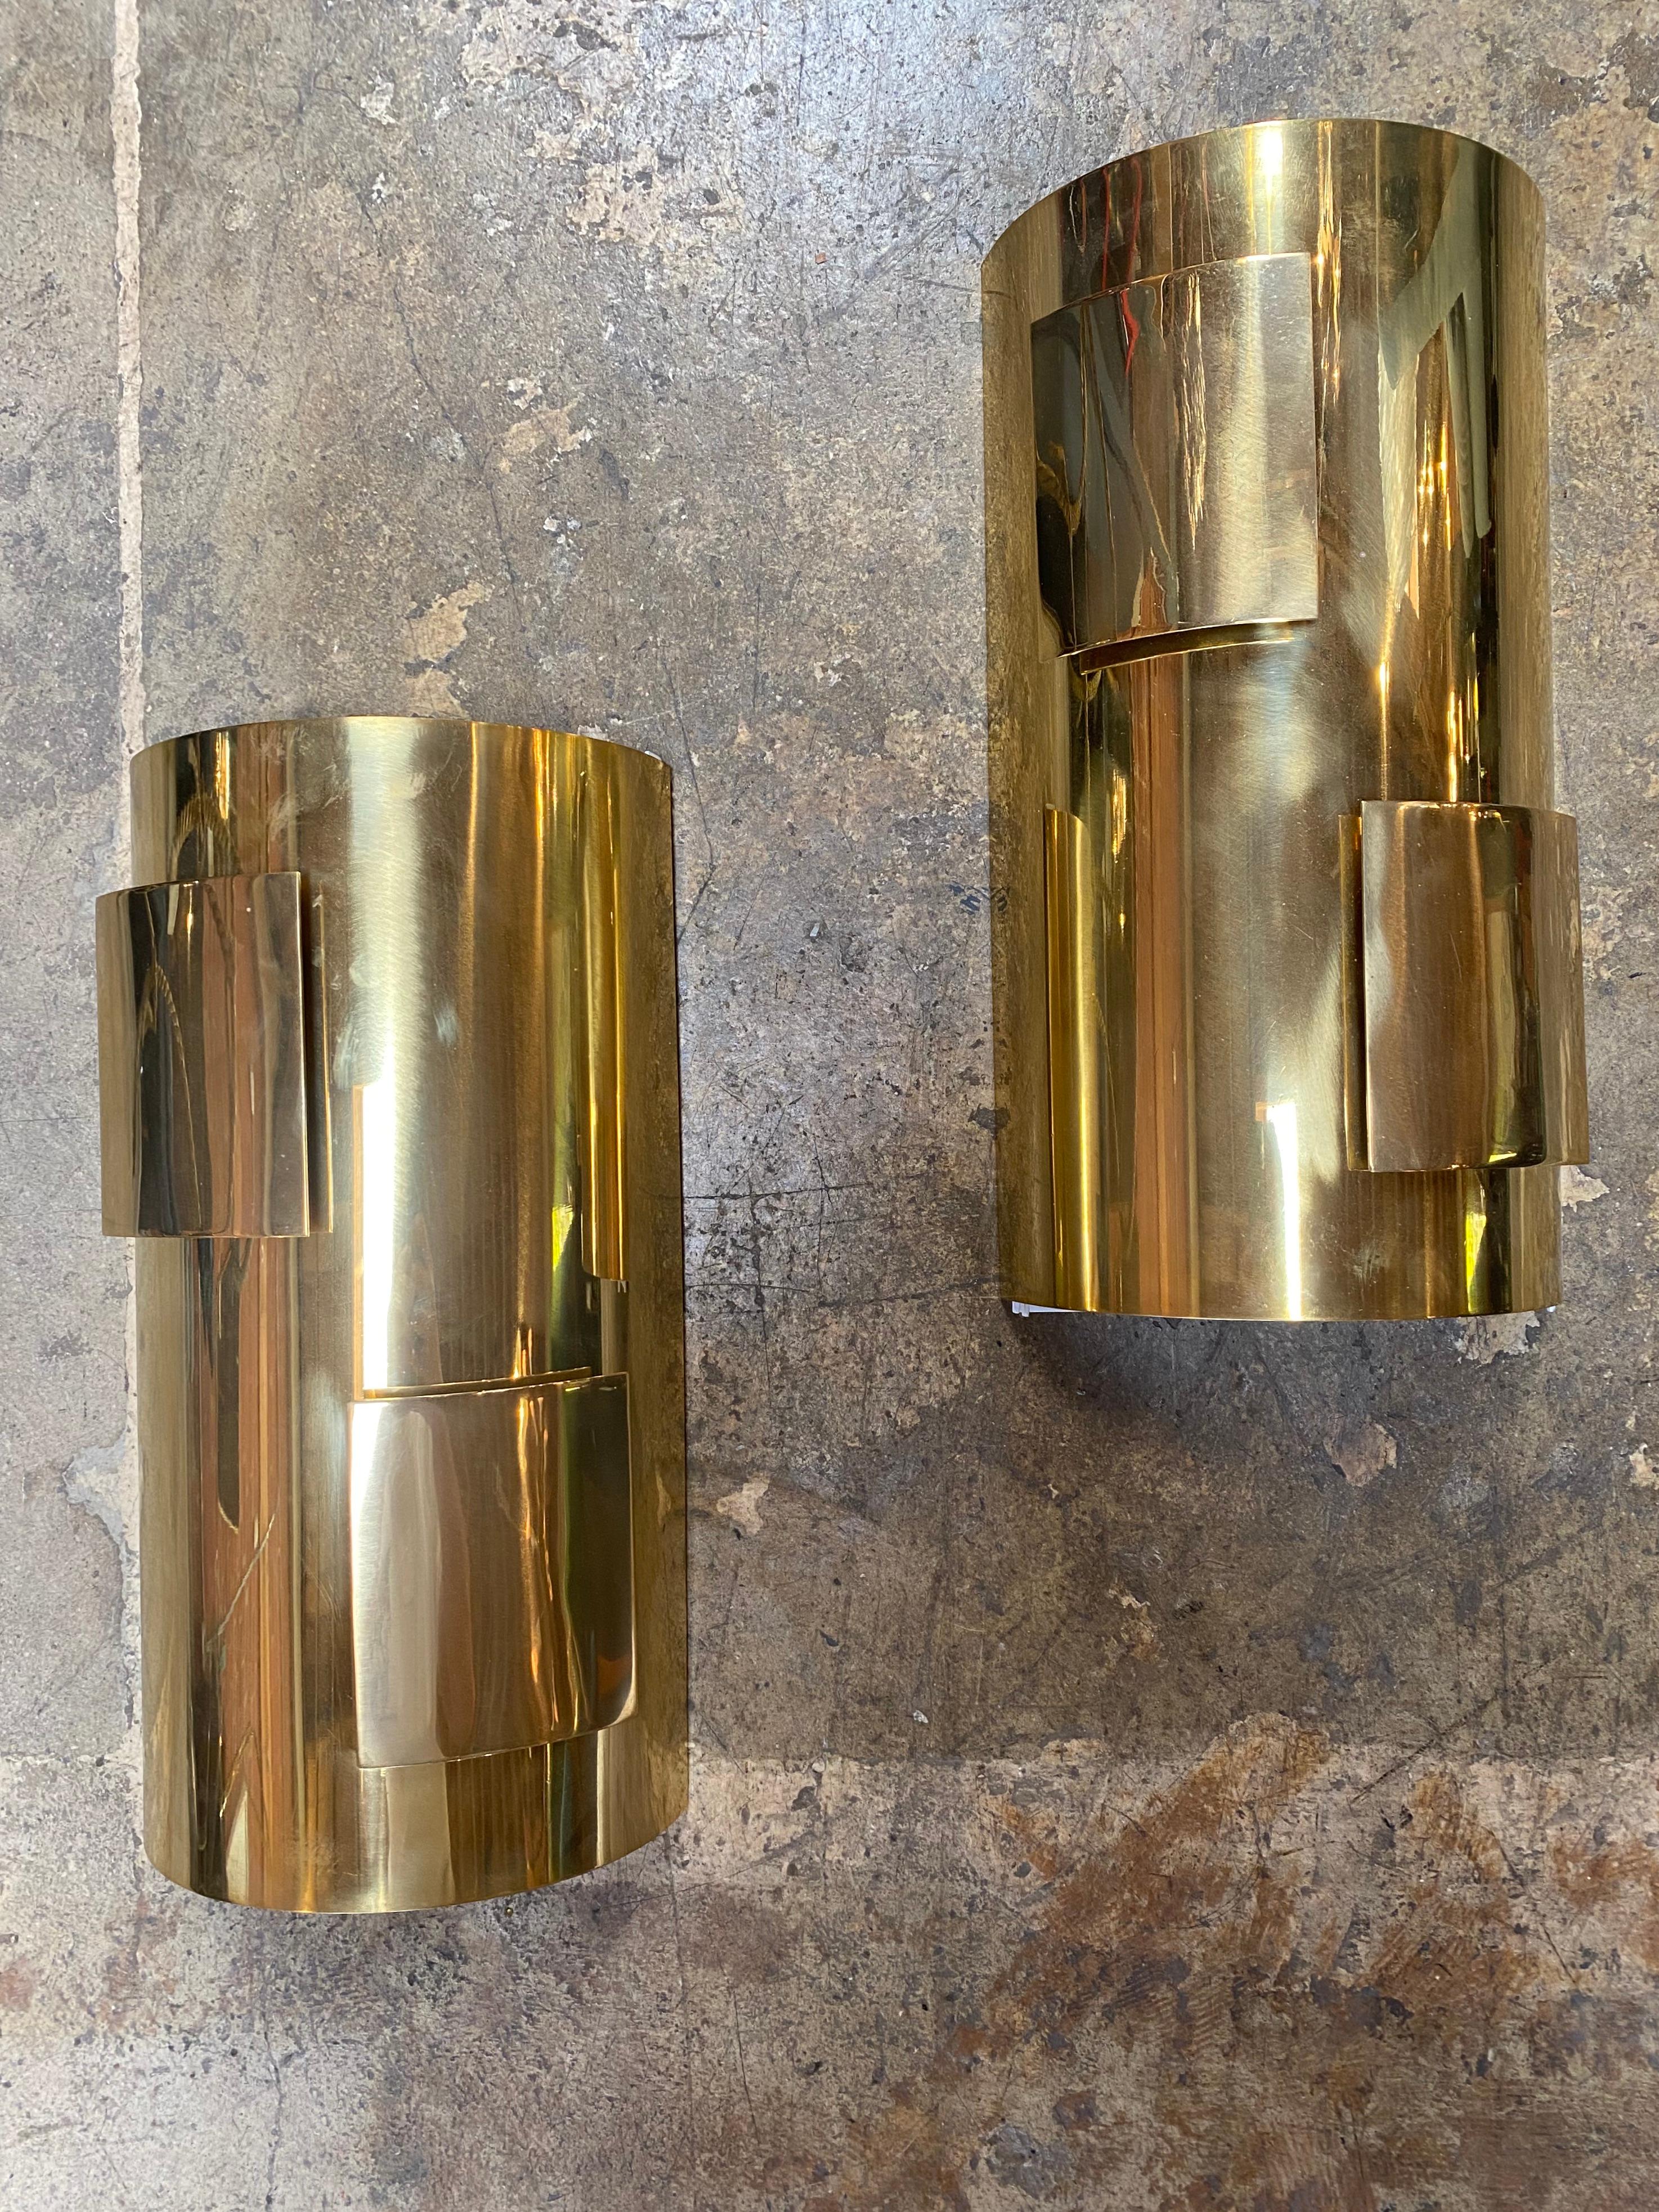 Set of two brass wall lights.
Each piece hosts two light bulbs partially hidden to create a soft and intriguing light effect.